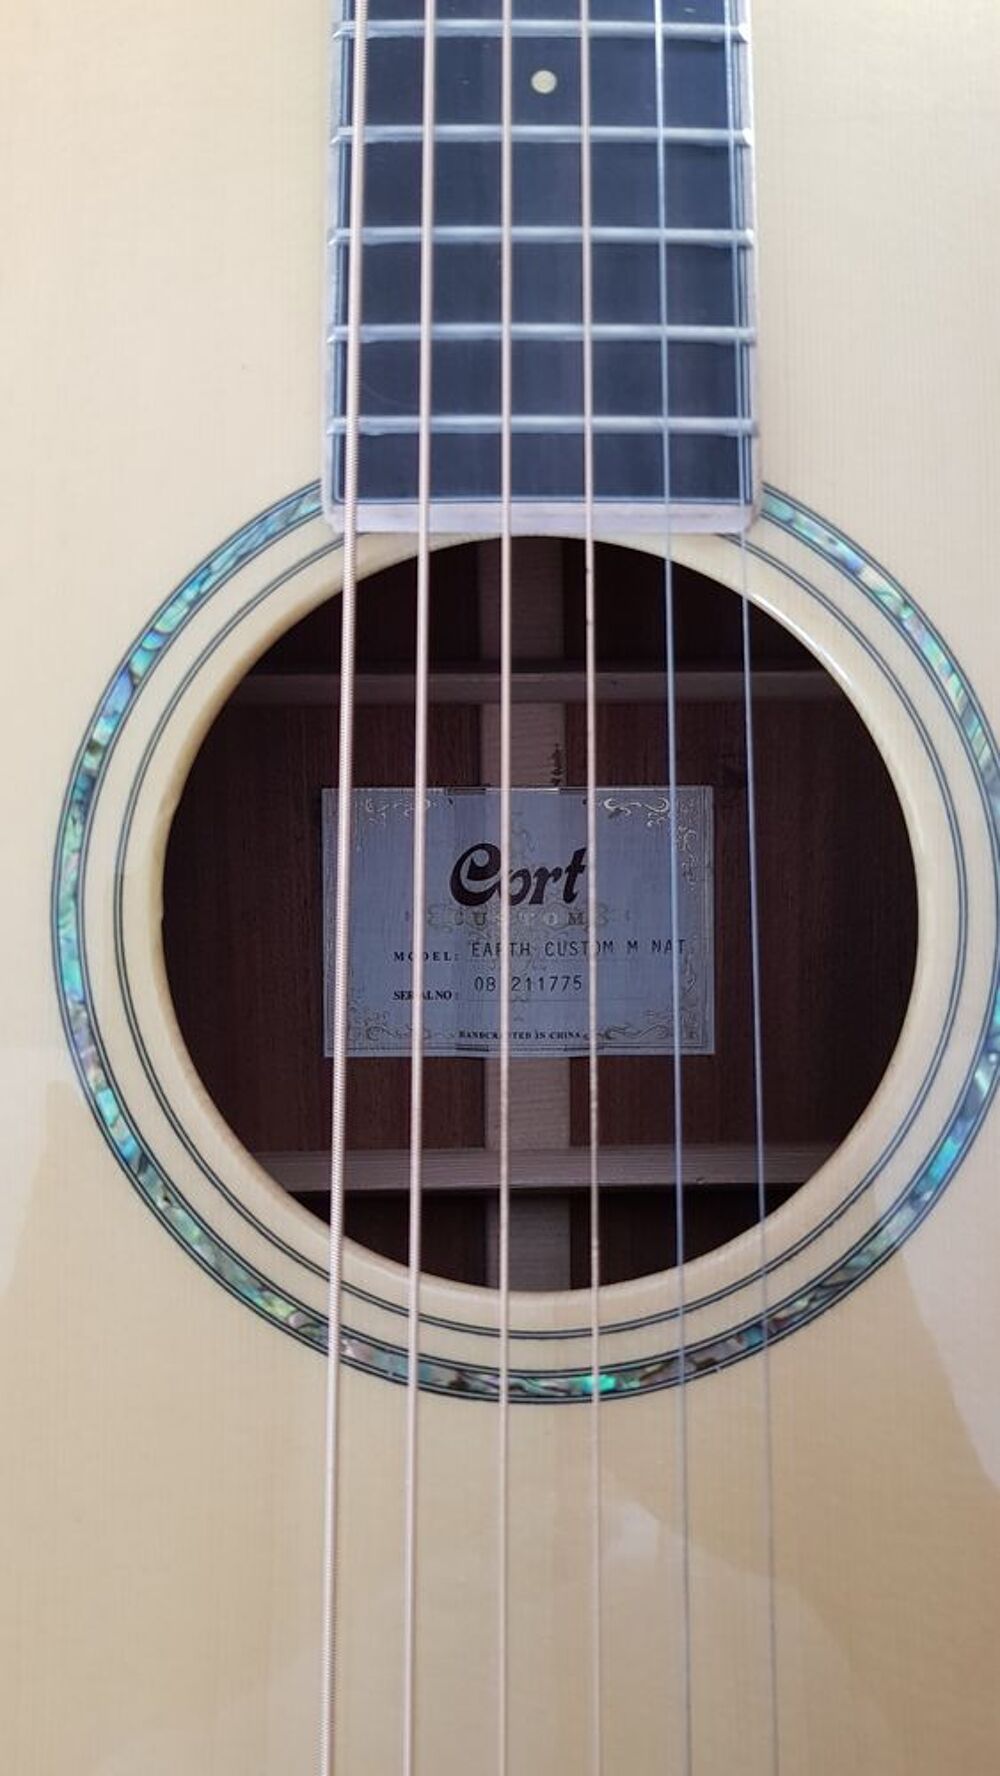 Guitare cort custom earth Instruments de musique